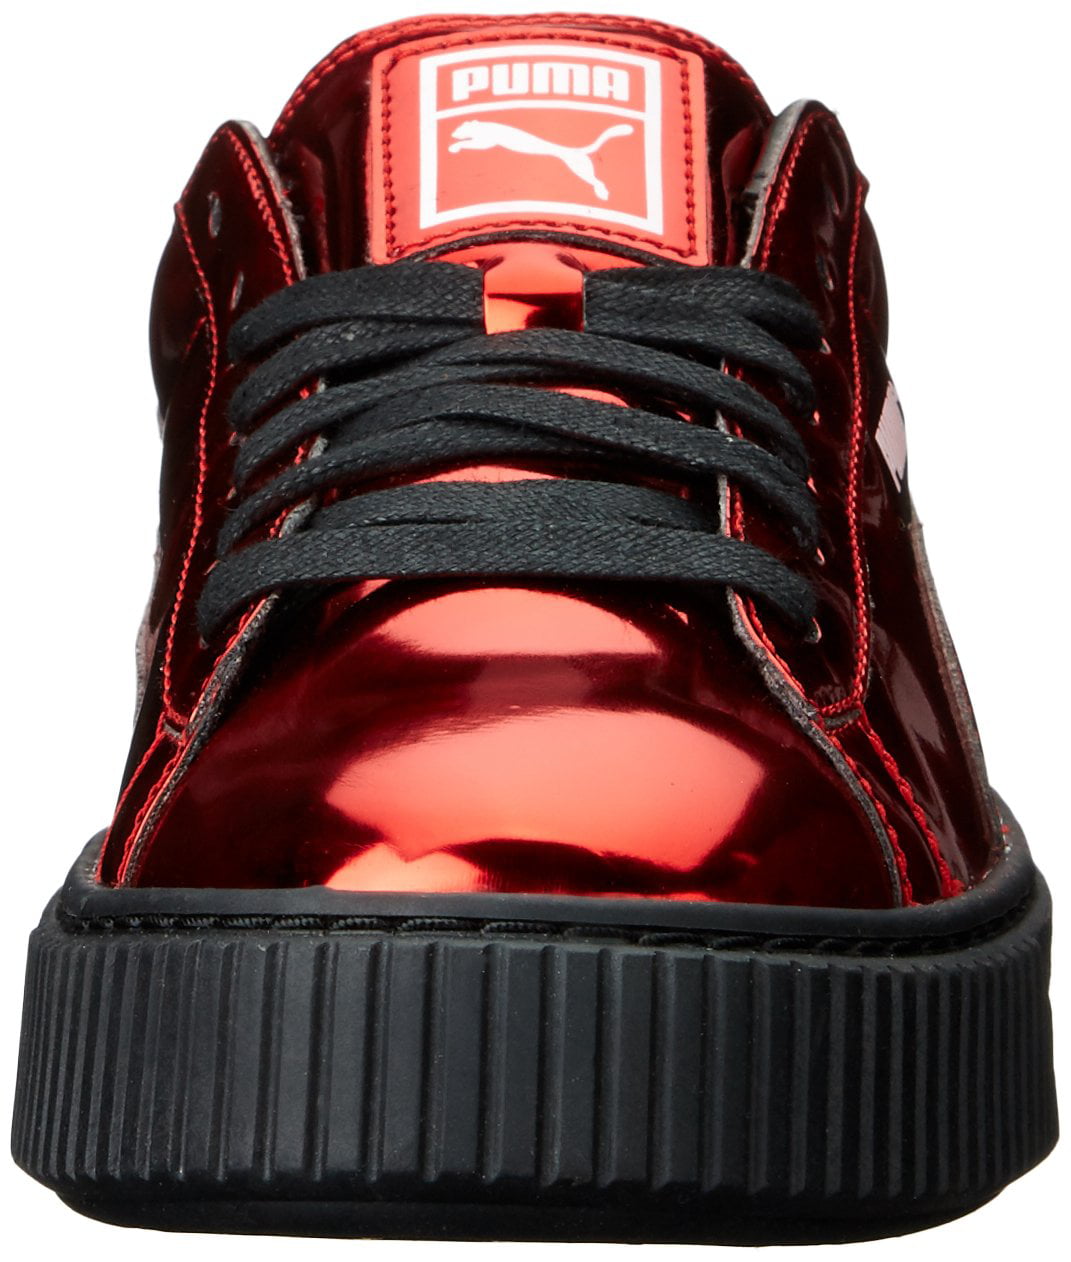 Puma Basket Sneakers Red - Walmart.com